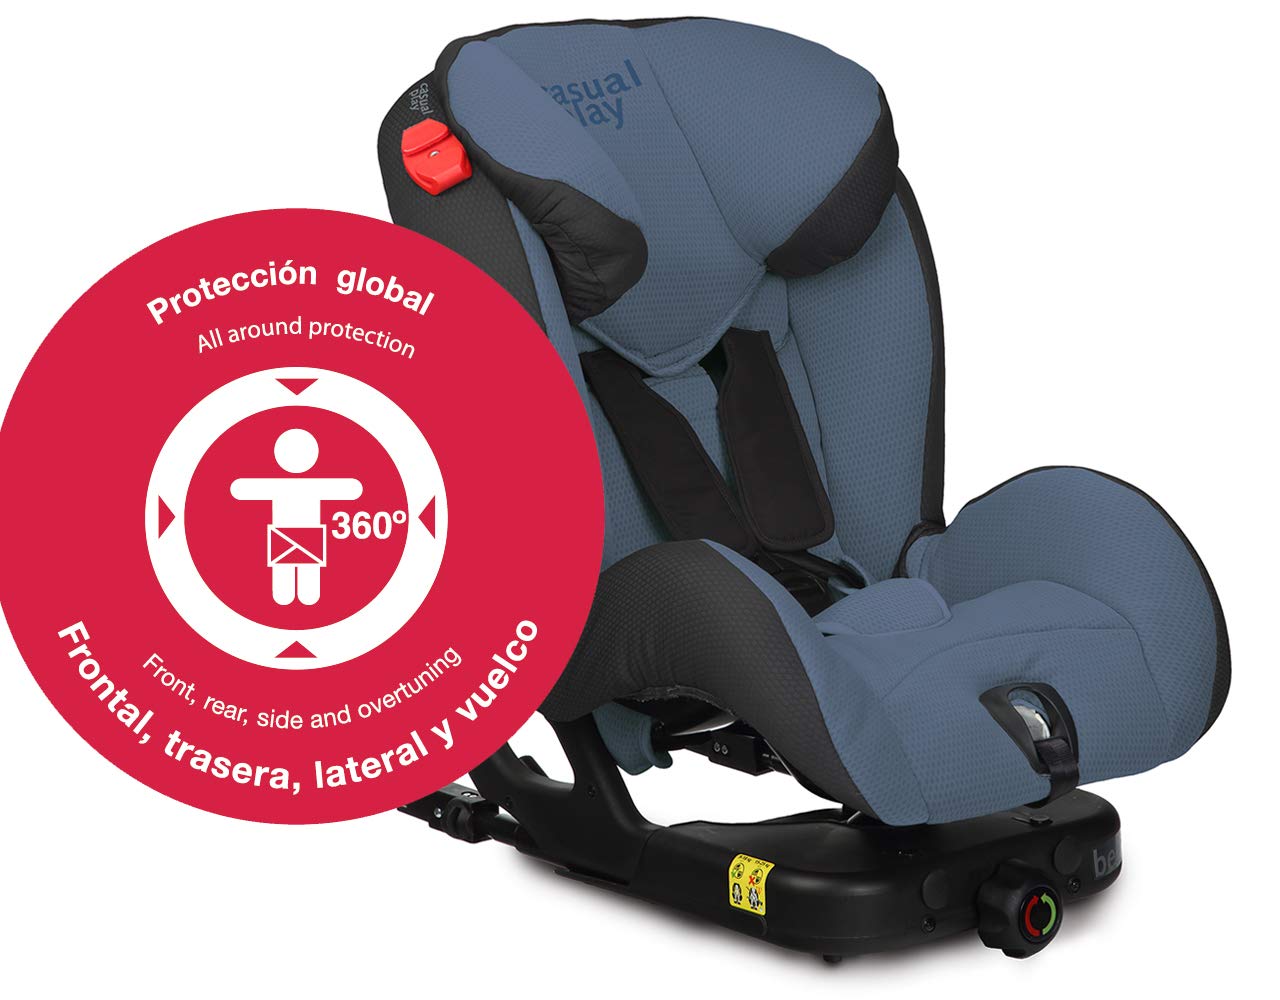 Casualplay 912 – Child\'s Car Seat Isofix Child Car Safety Seat Basket Colour Ebony